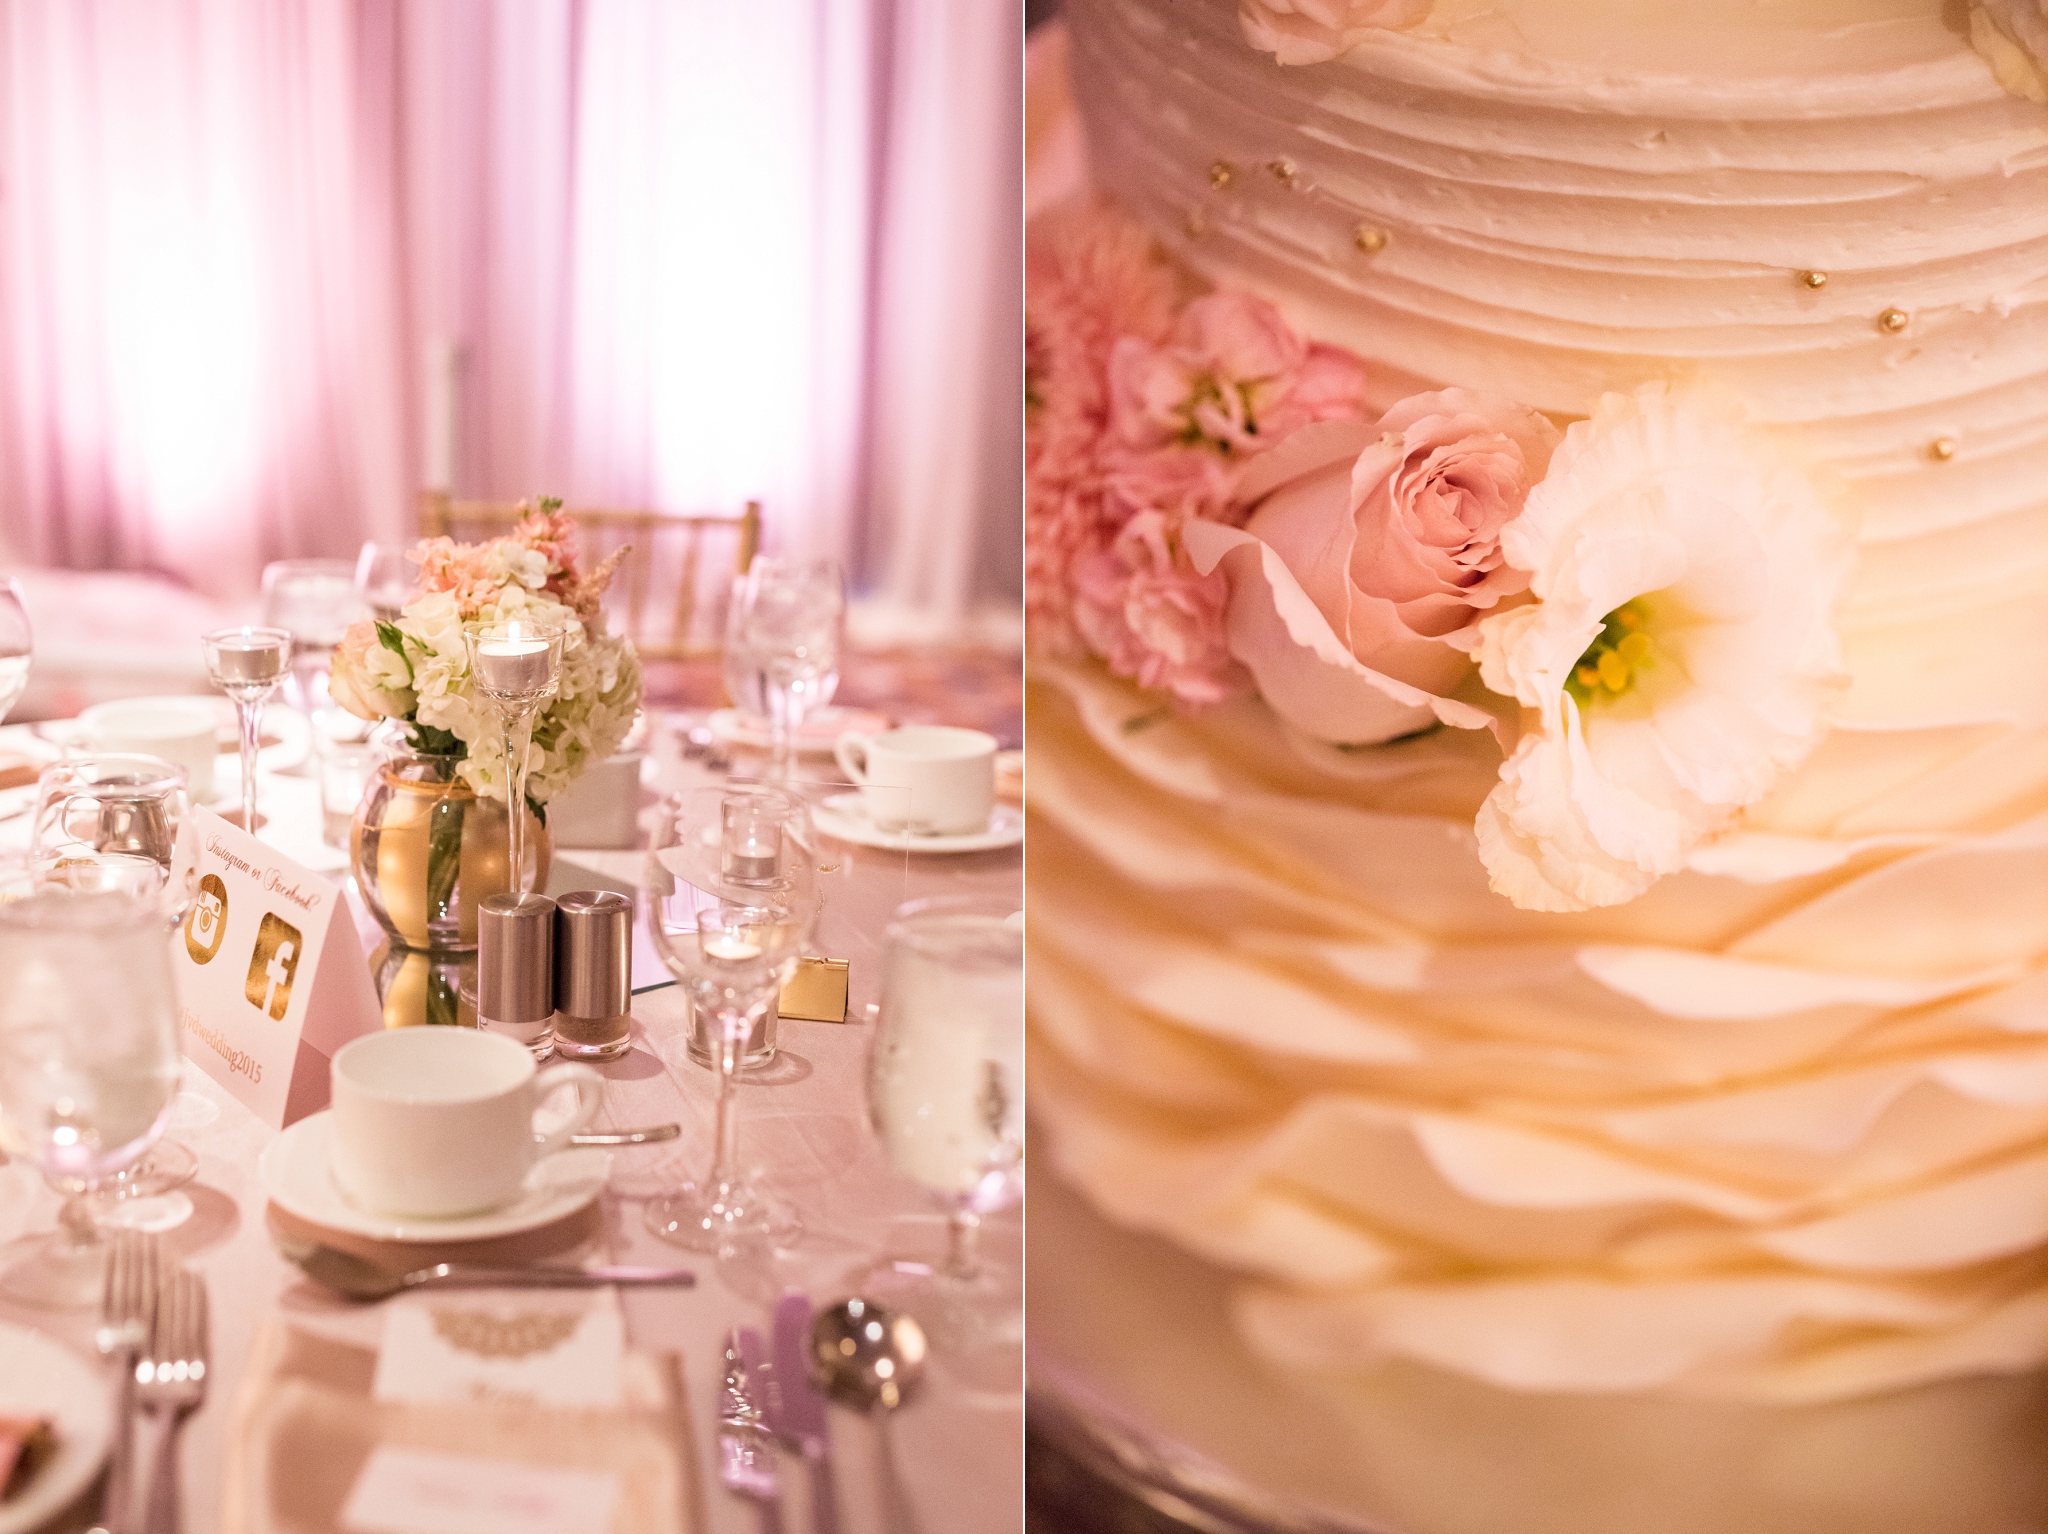 matrix hotel edmonton wedding photos blush and gold wedding decor the art of cake edmonton